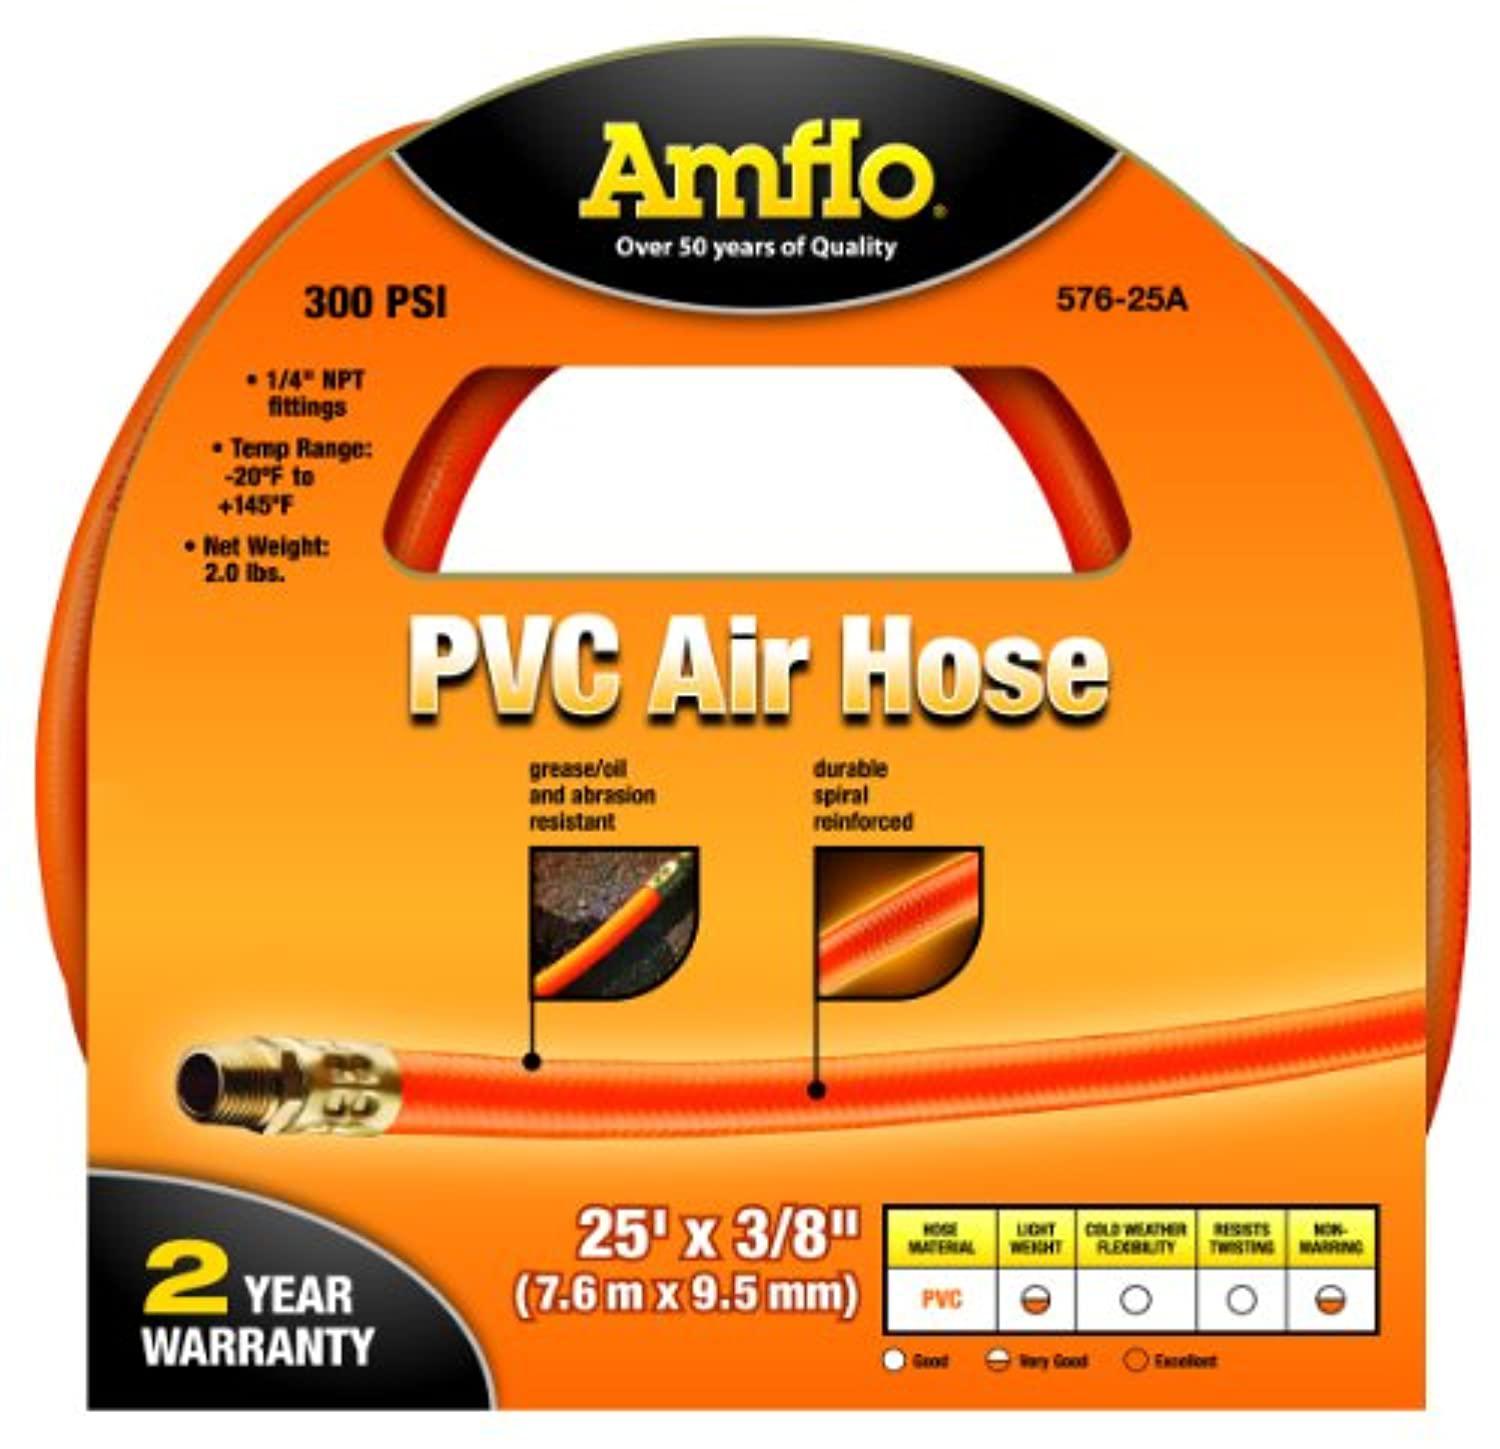 amflo 576-25a orange 300 psi pvc air hose 3/8" x 25' with 1/4" mnpt end fittings